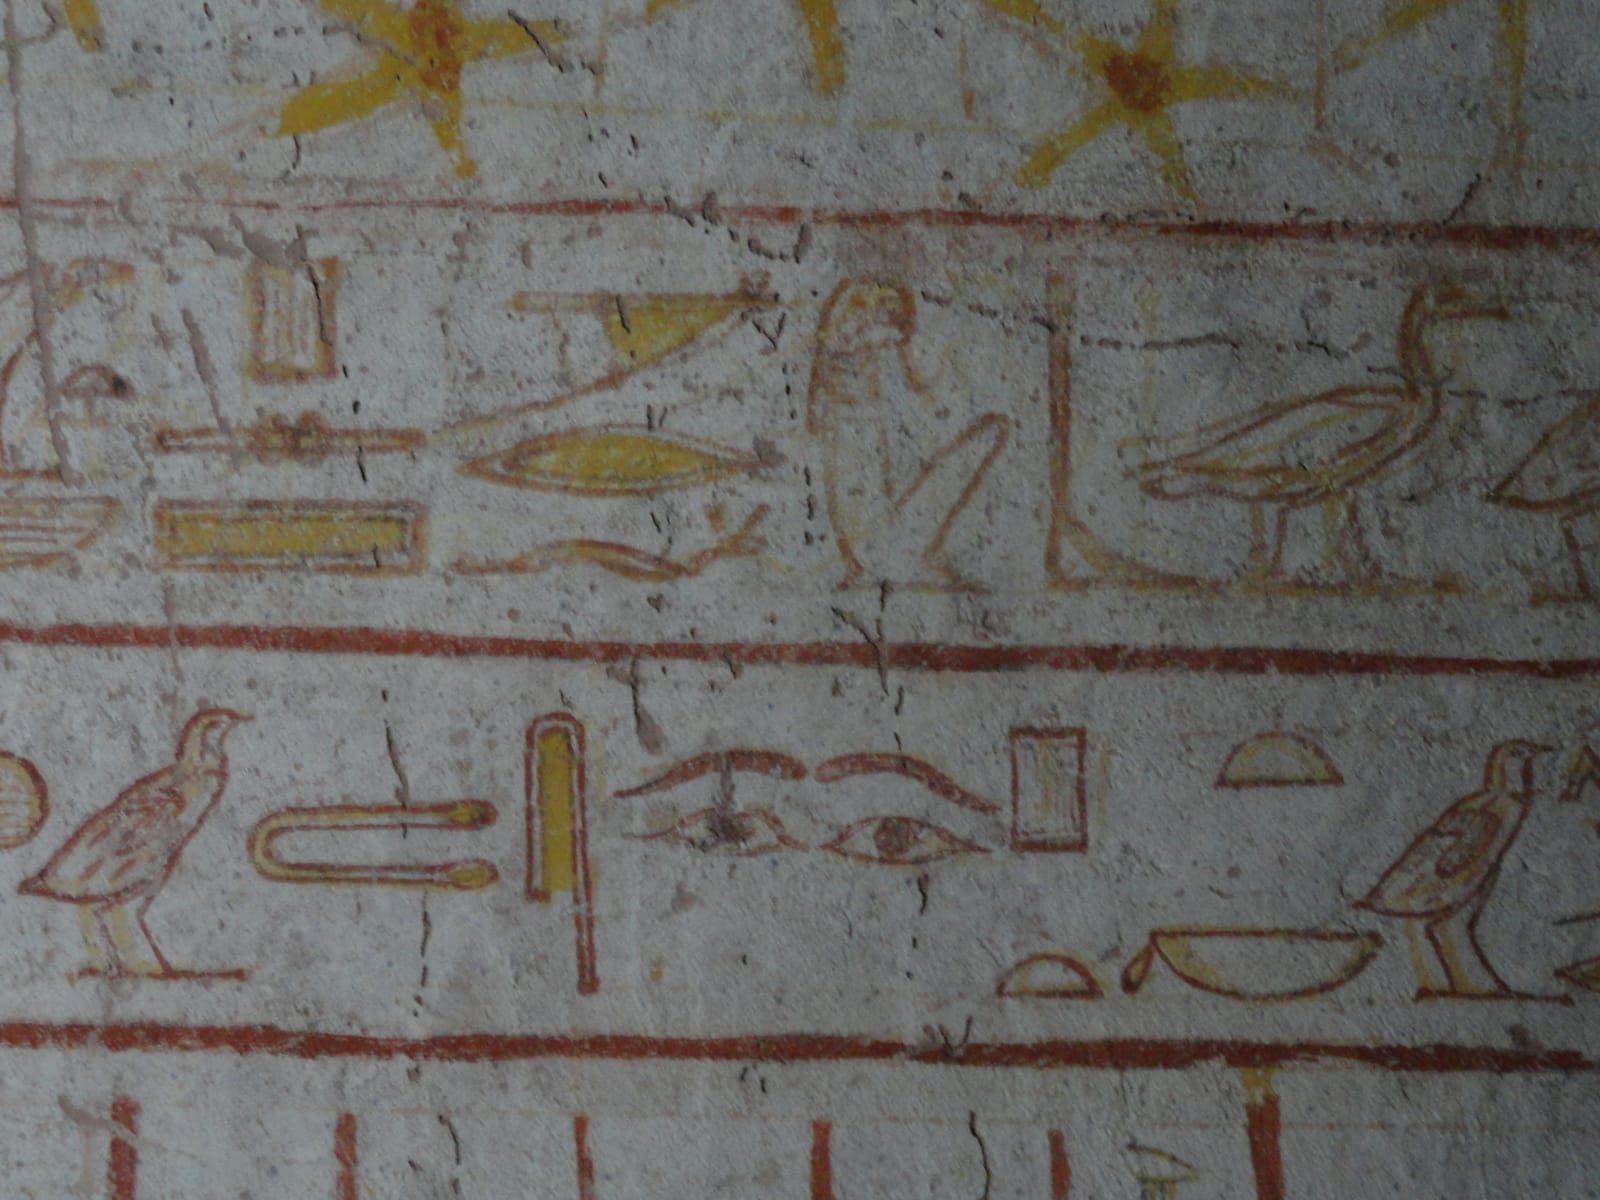 ancient hieroglyphs on a wall 